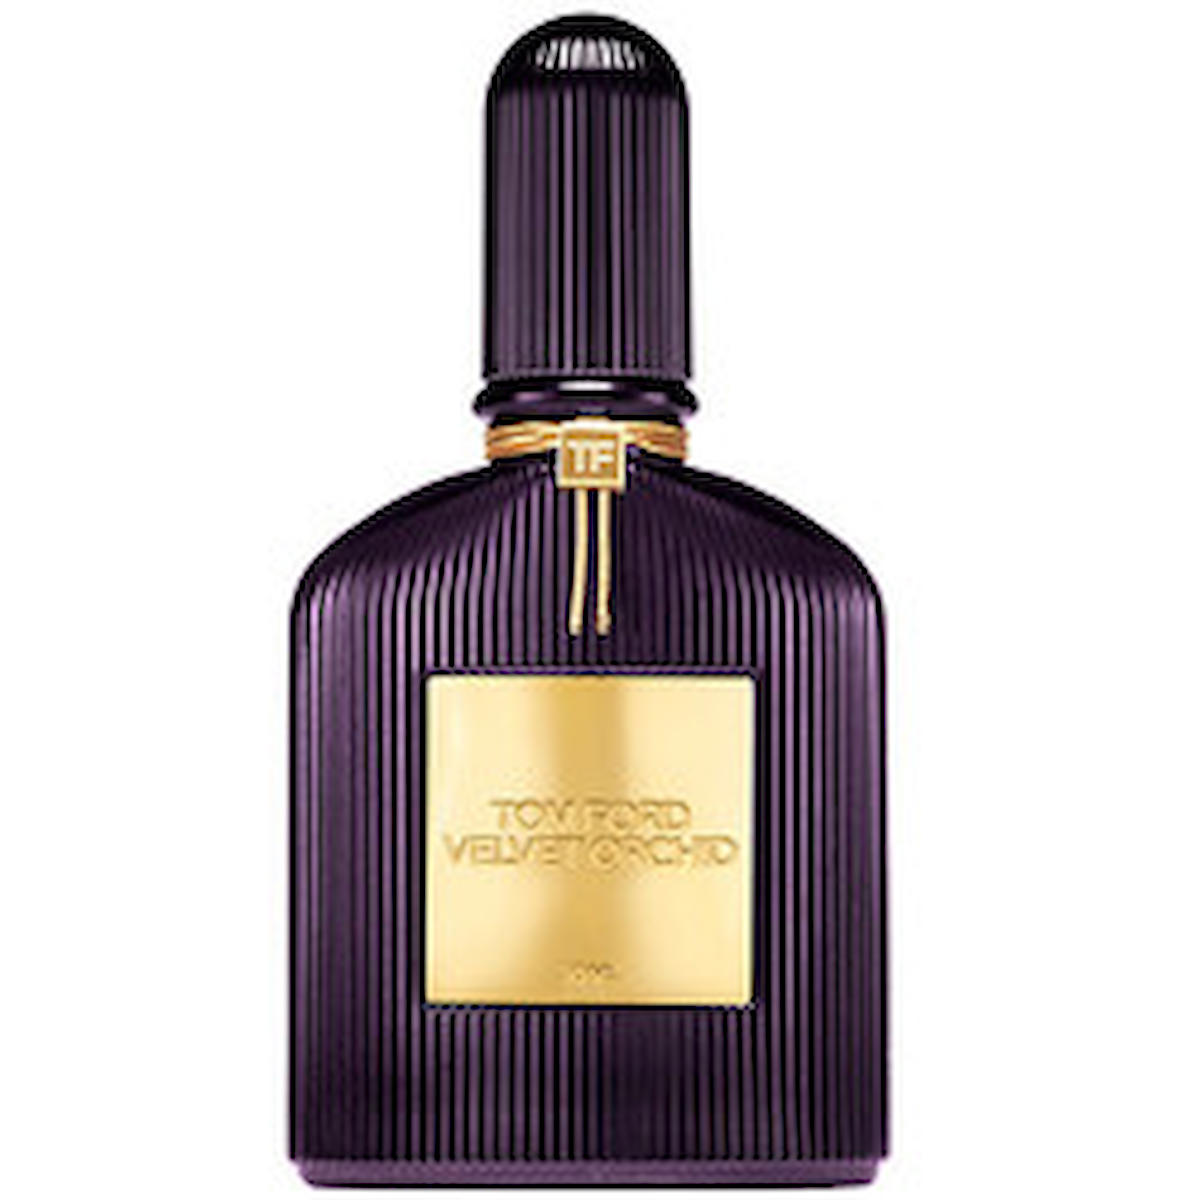 Tom Ford Velvet Orchid EDP Çiçeksi Kadın Parfüm 30 ml